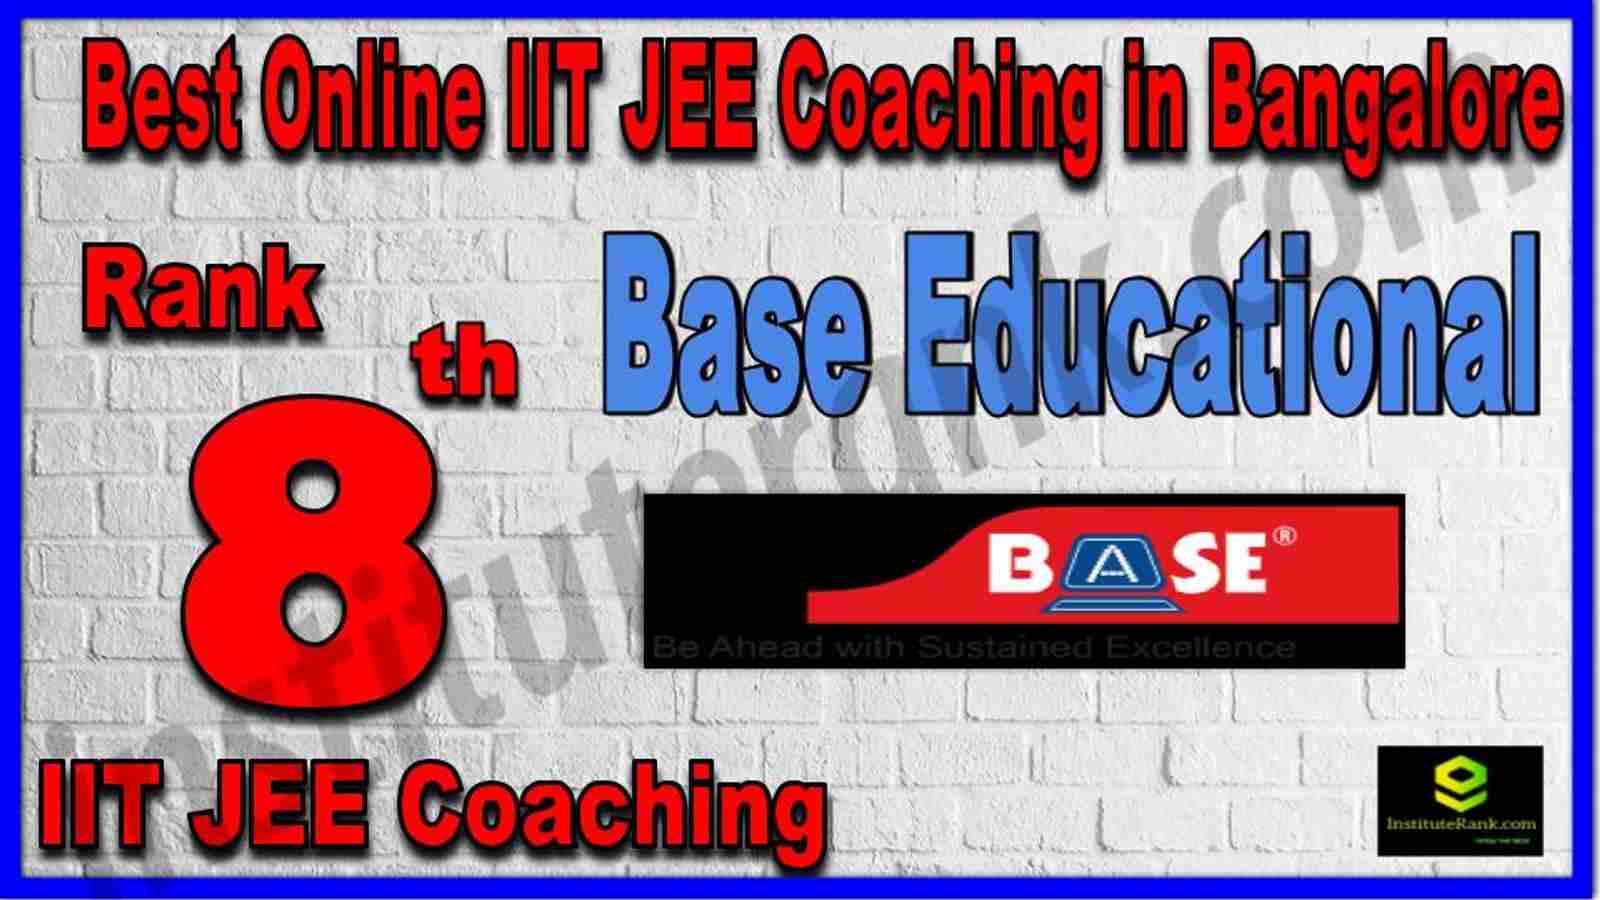 Rank 8th Best Online IIT JEE Coaching in Bangalore